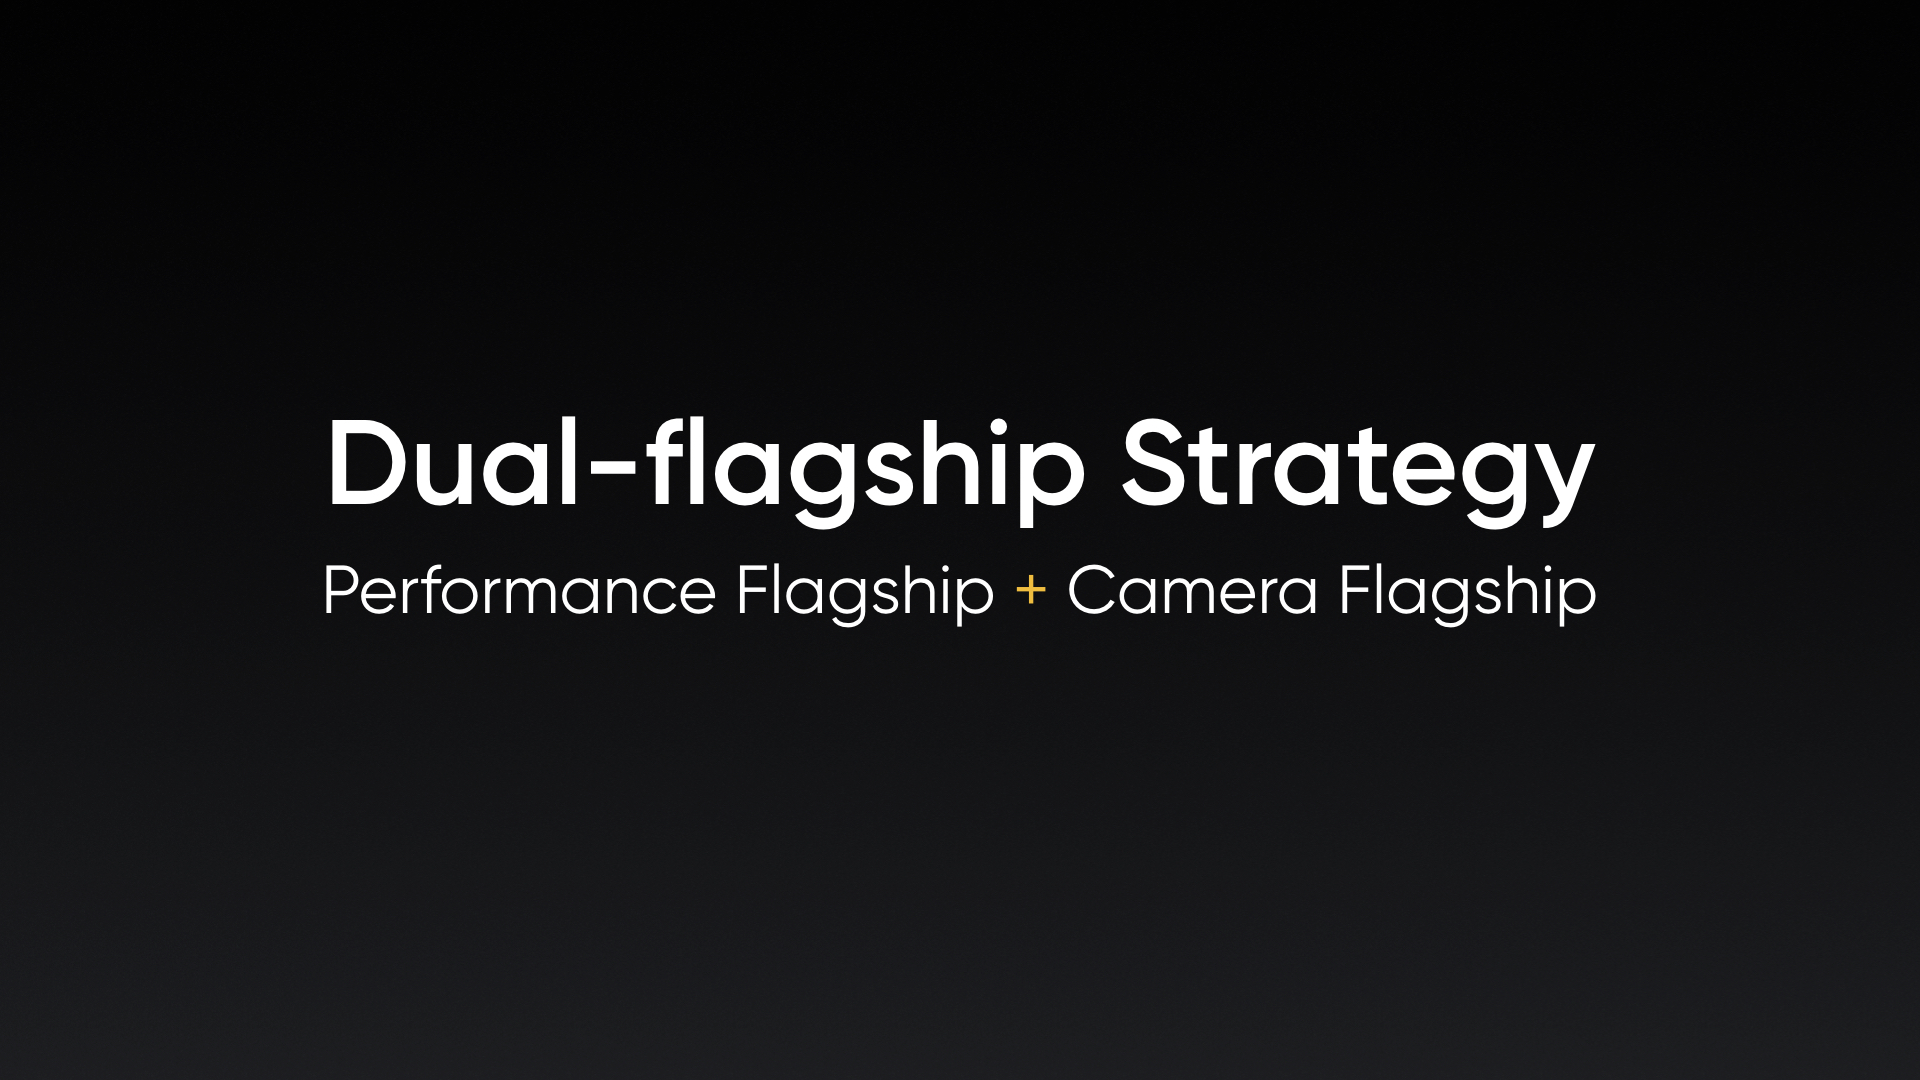 Visual Dual flagship Strategy